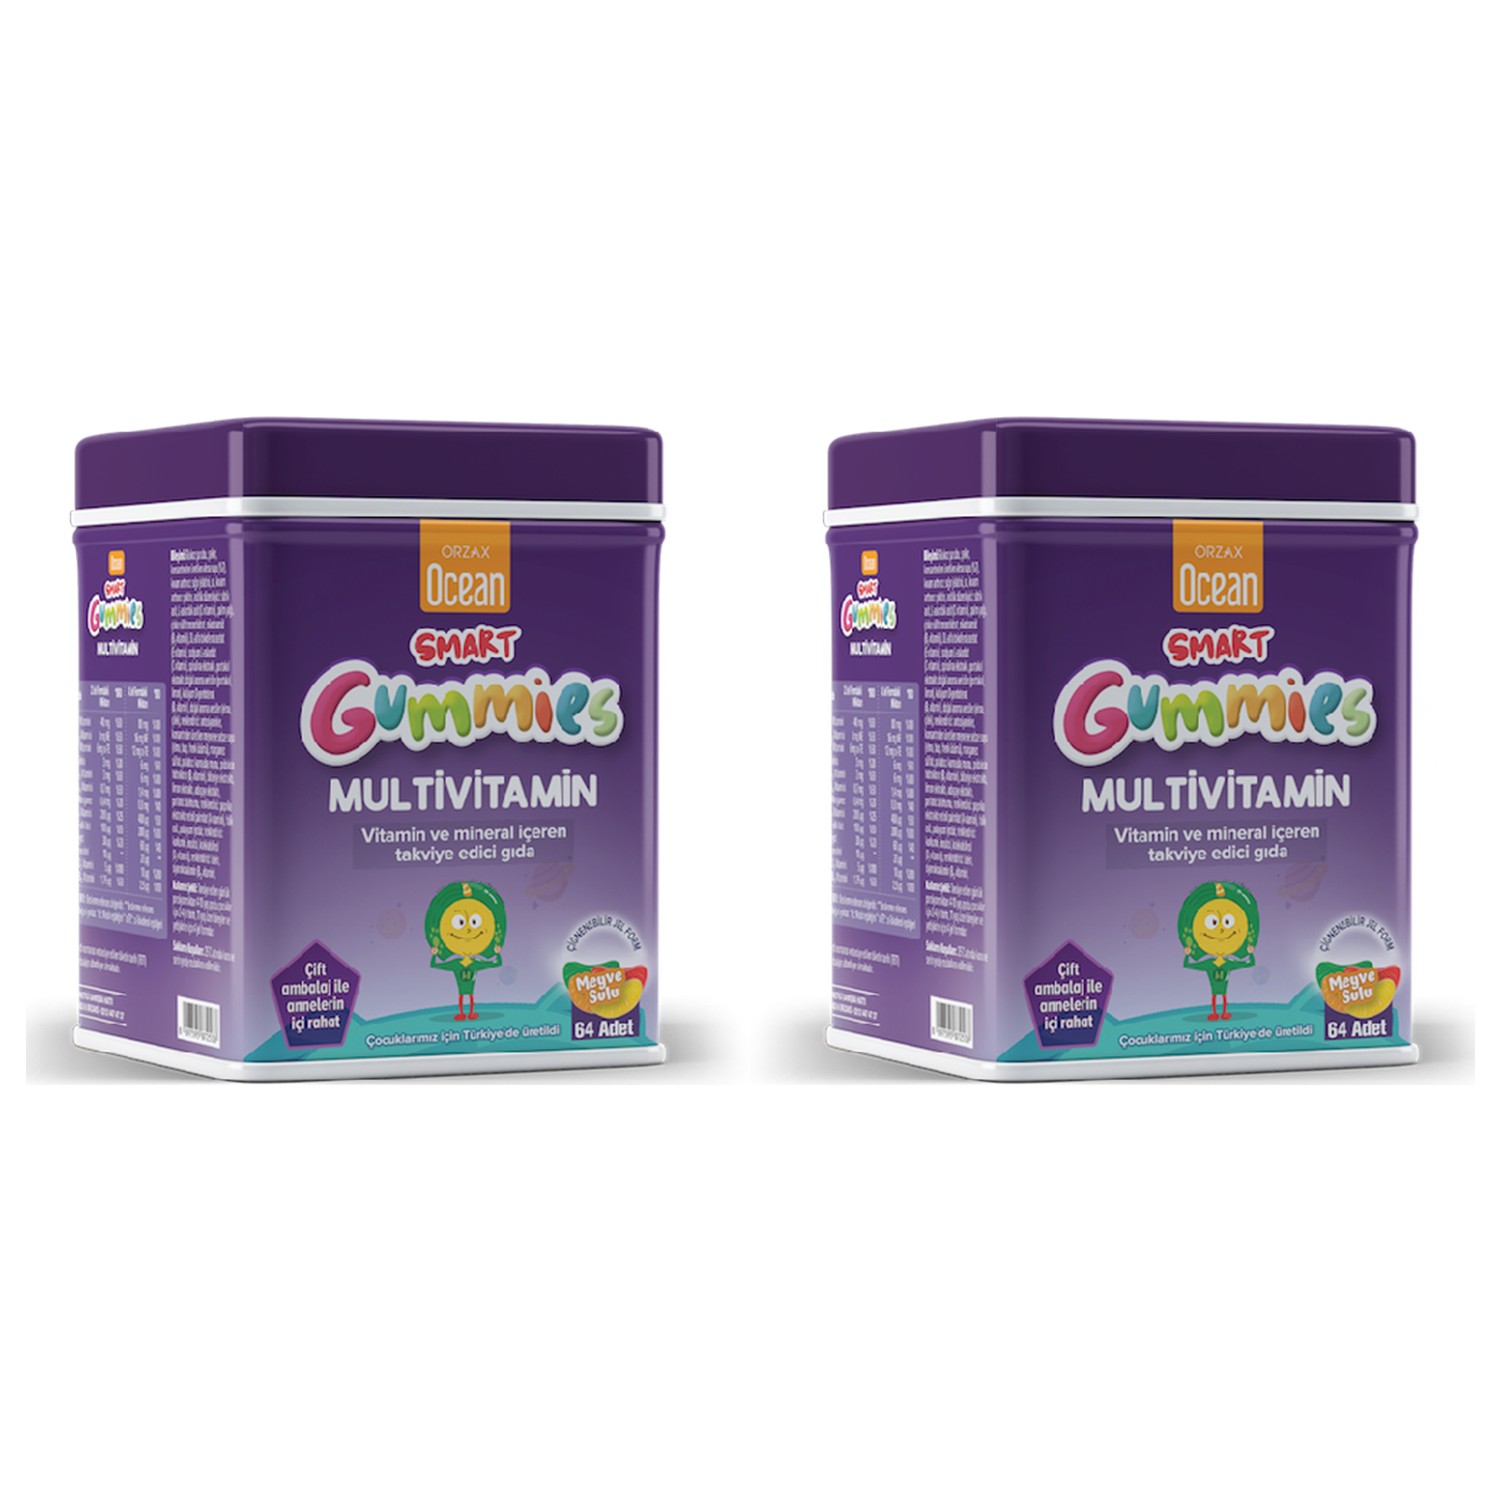 Пищевая добавка Orzax Ocean Smart Gummies Multivitamin Clenchable, 2 упаковки по 64 таблетки livs gummies men’s multivitamin